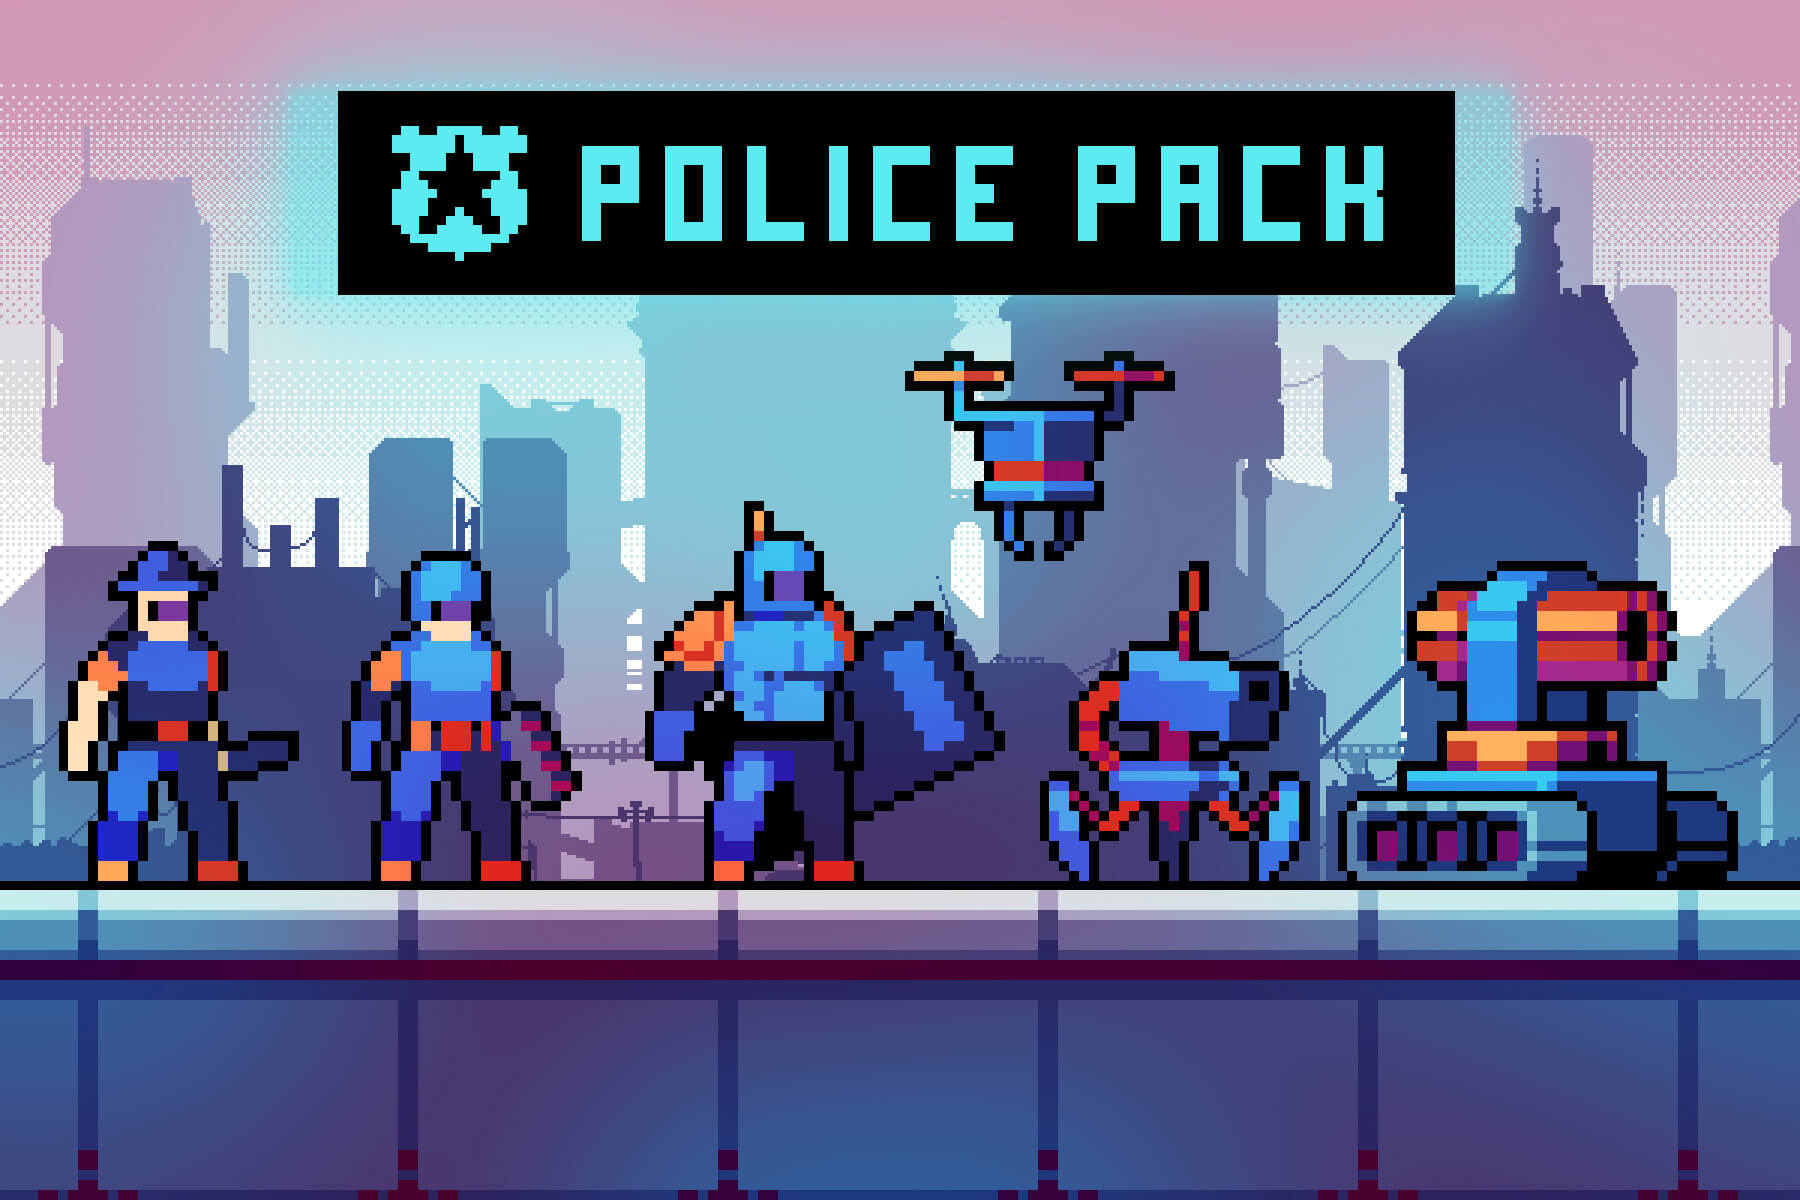 cyberpunk police